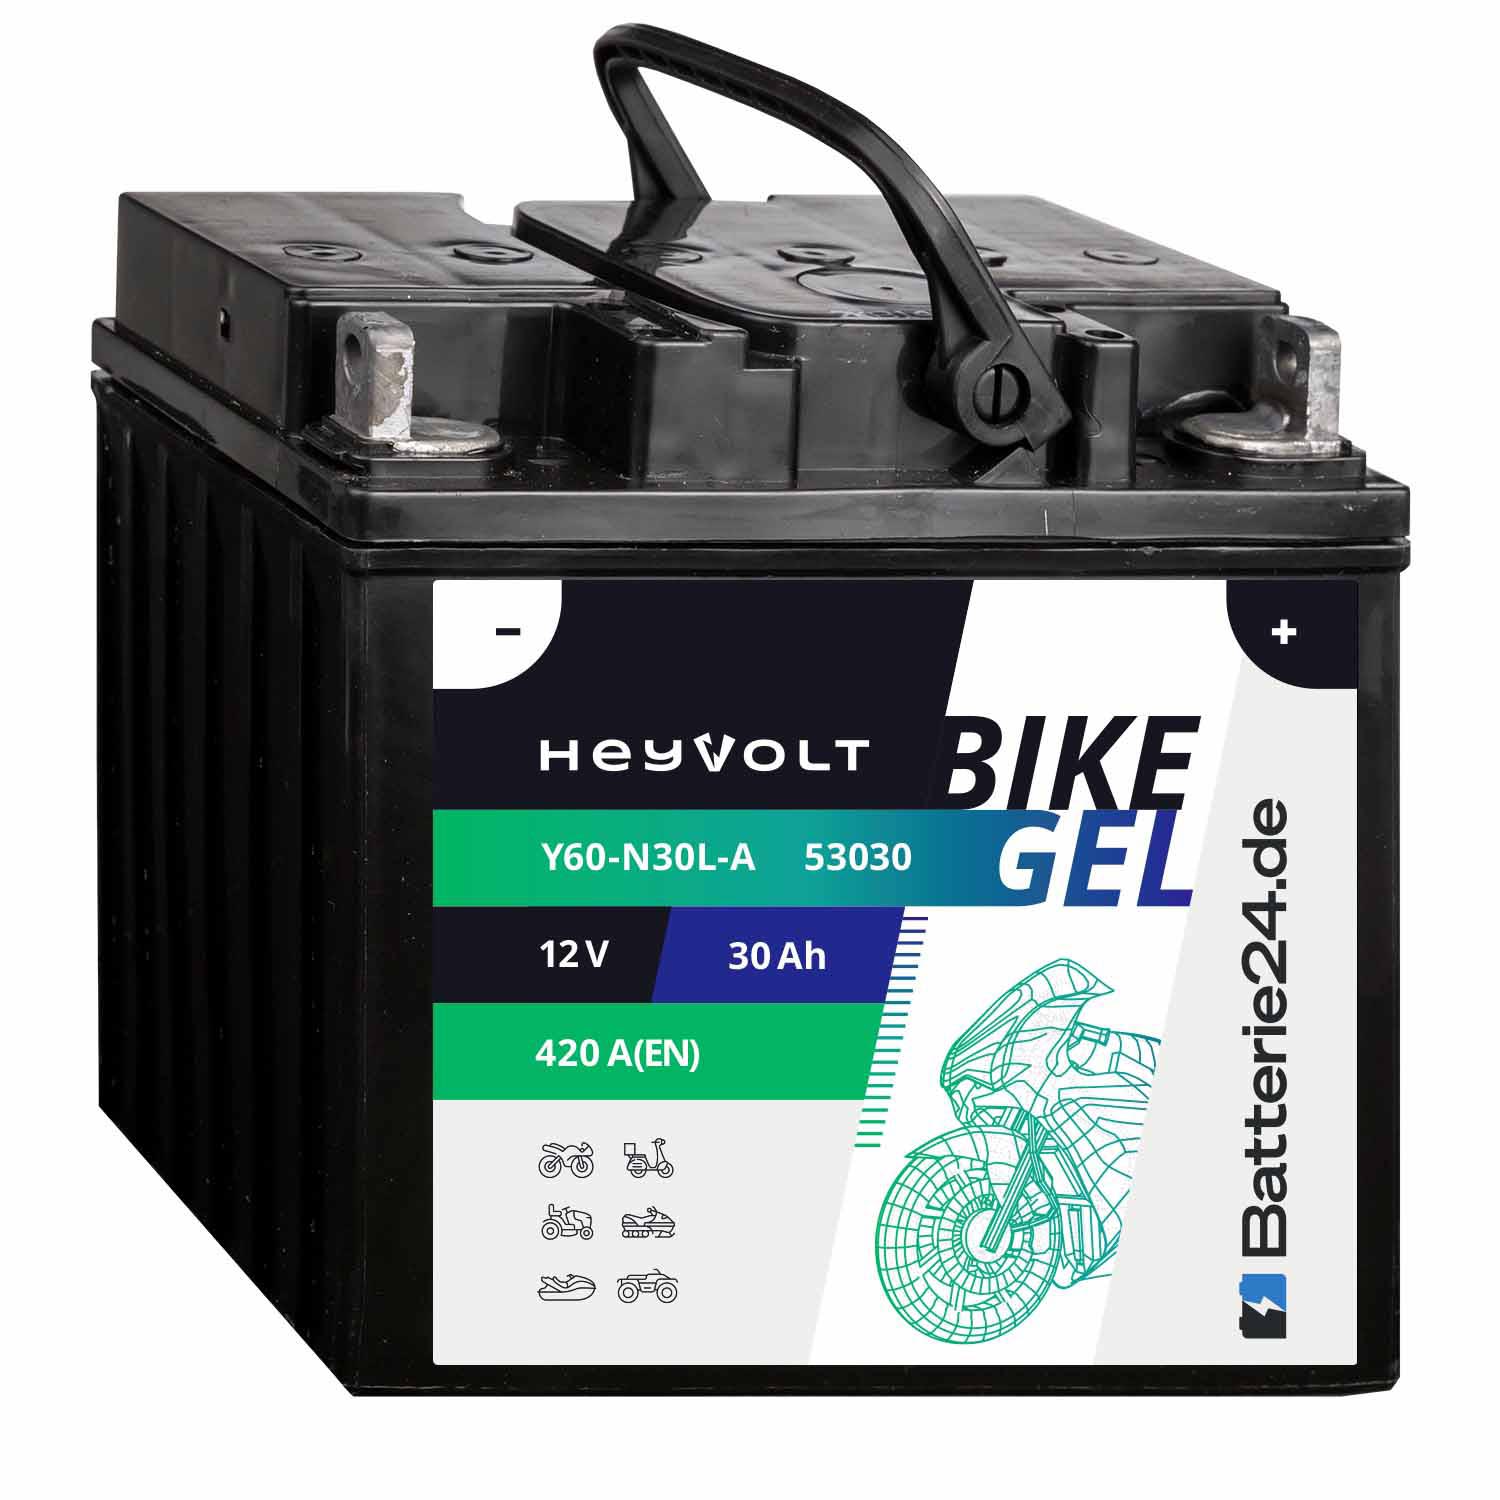 HeyVolt BIKE GEL Motorradbatterie Y60-N30L-A 53030 12V 30Ah